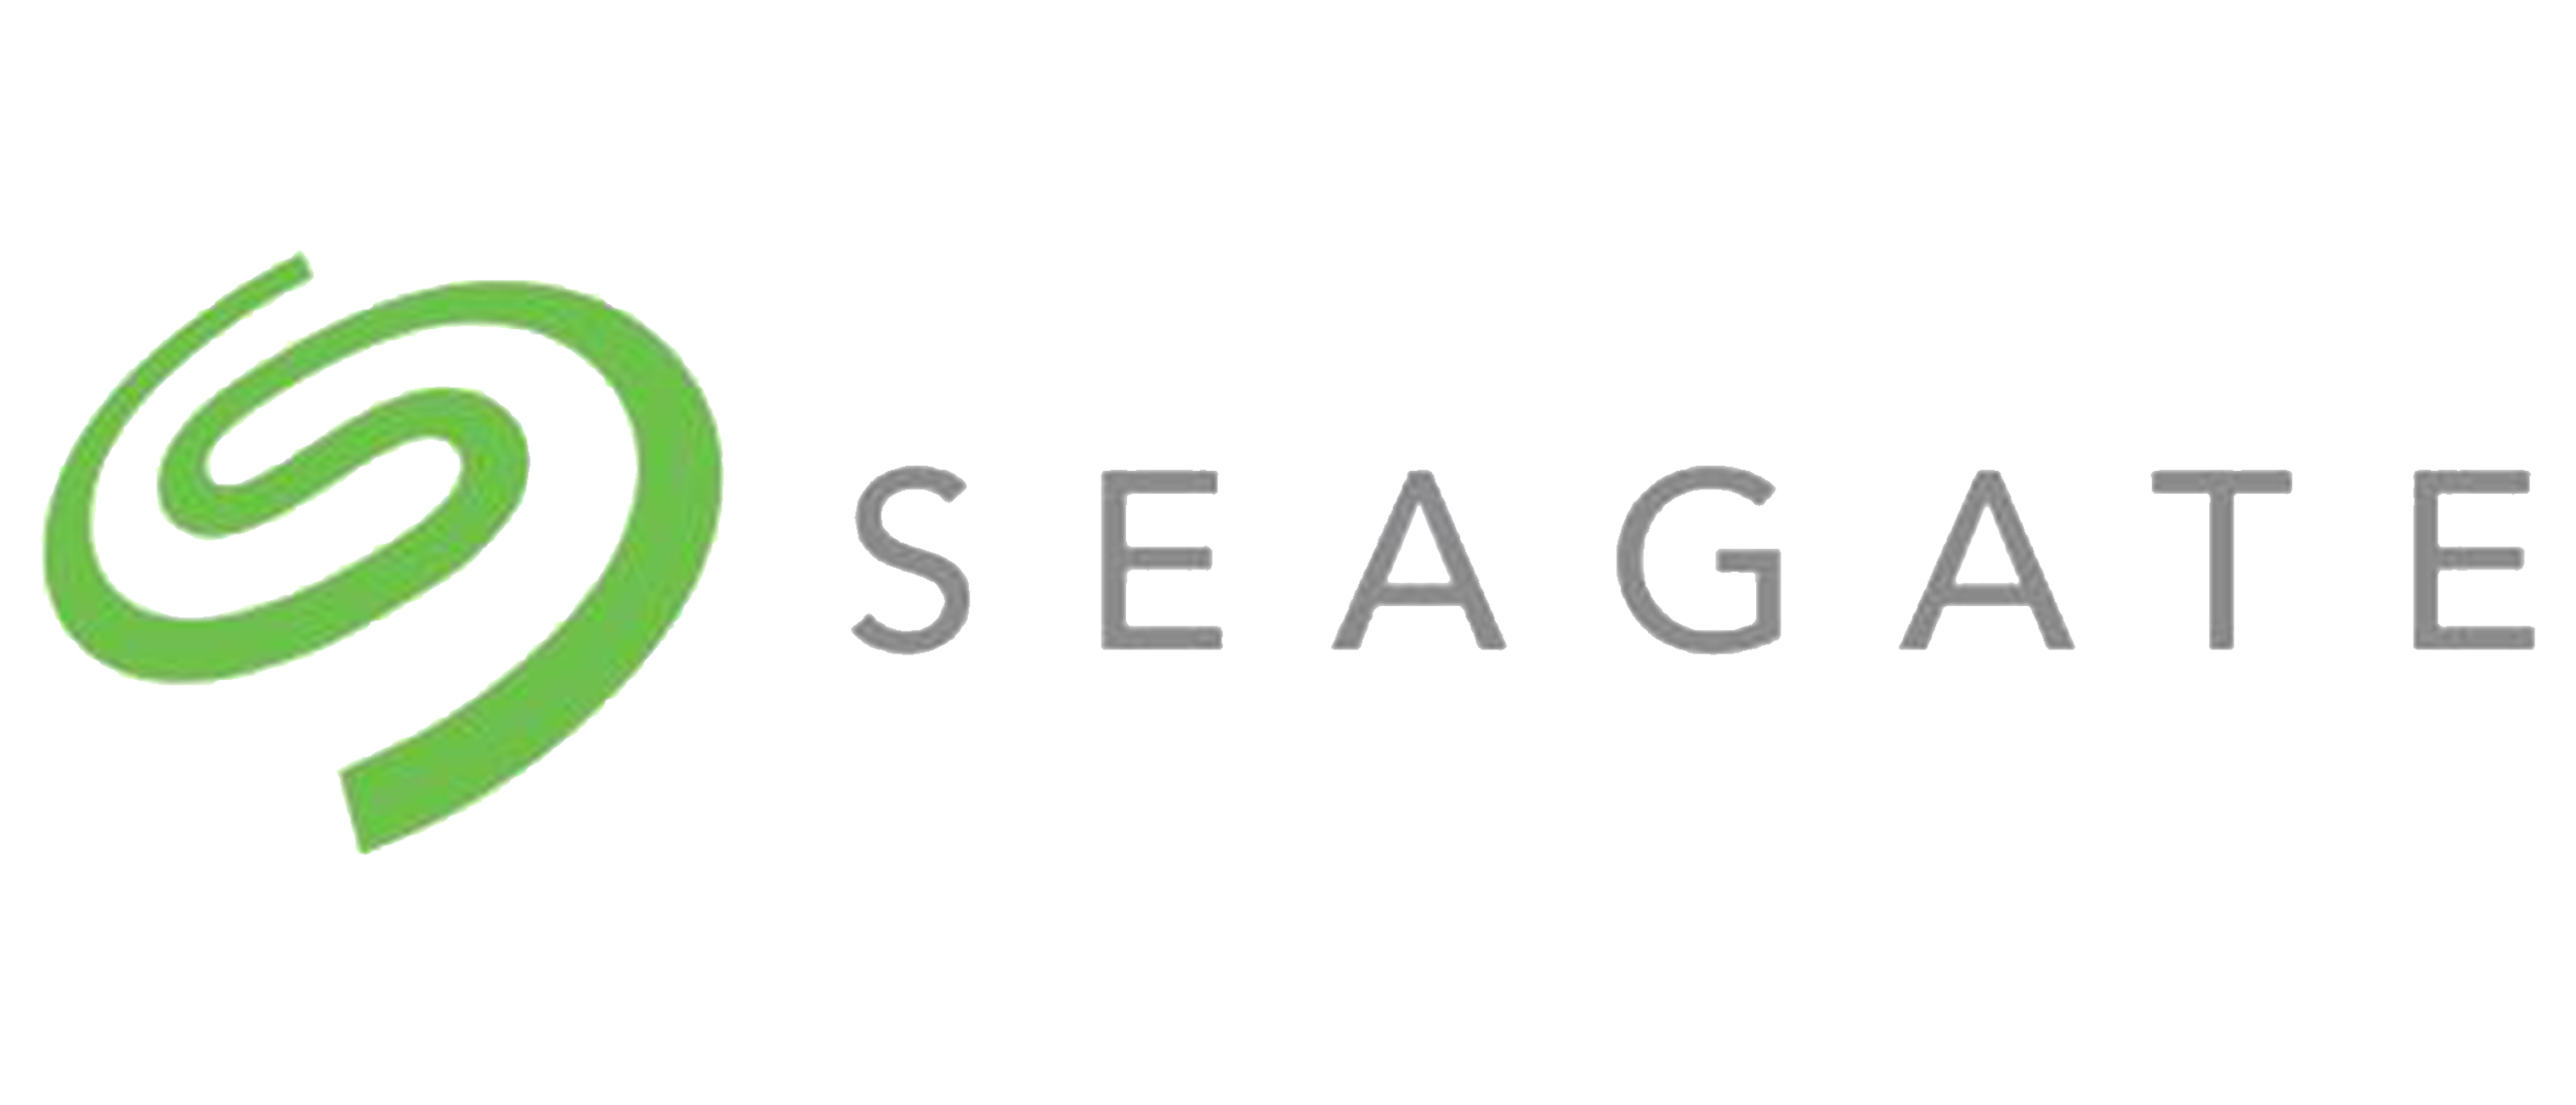 Seagat